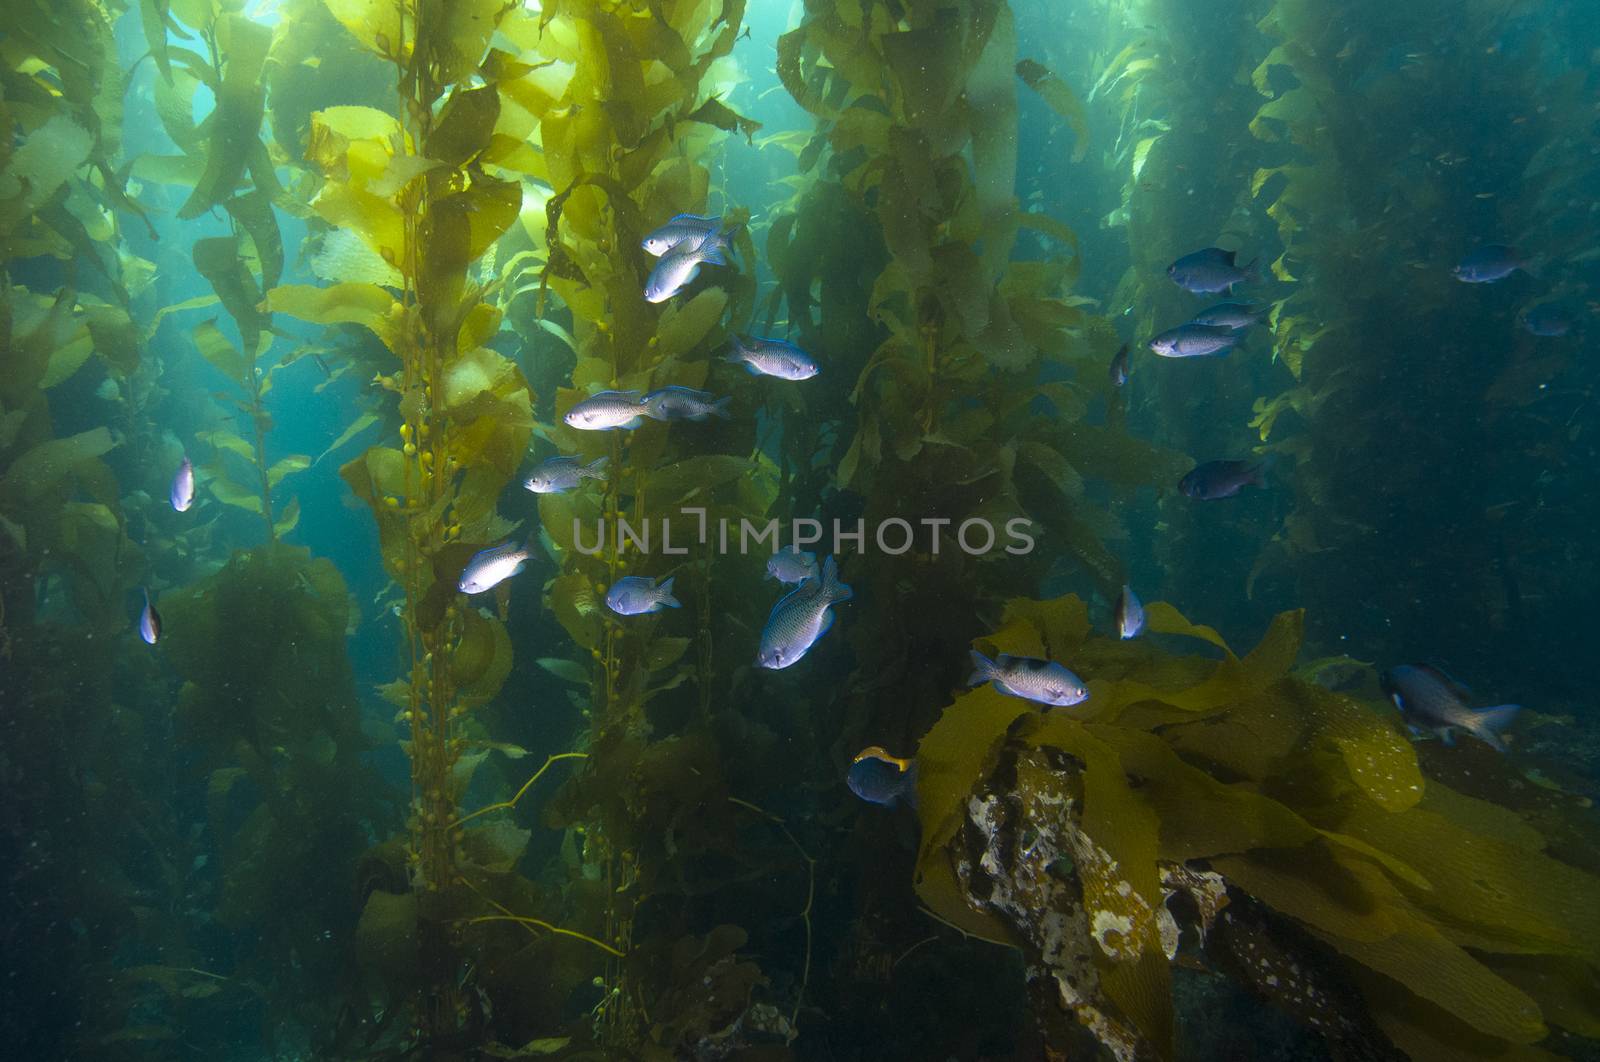 Fish in kelp reef off Catalina Island, CA by Njean